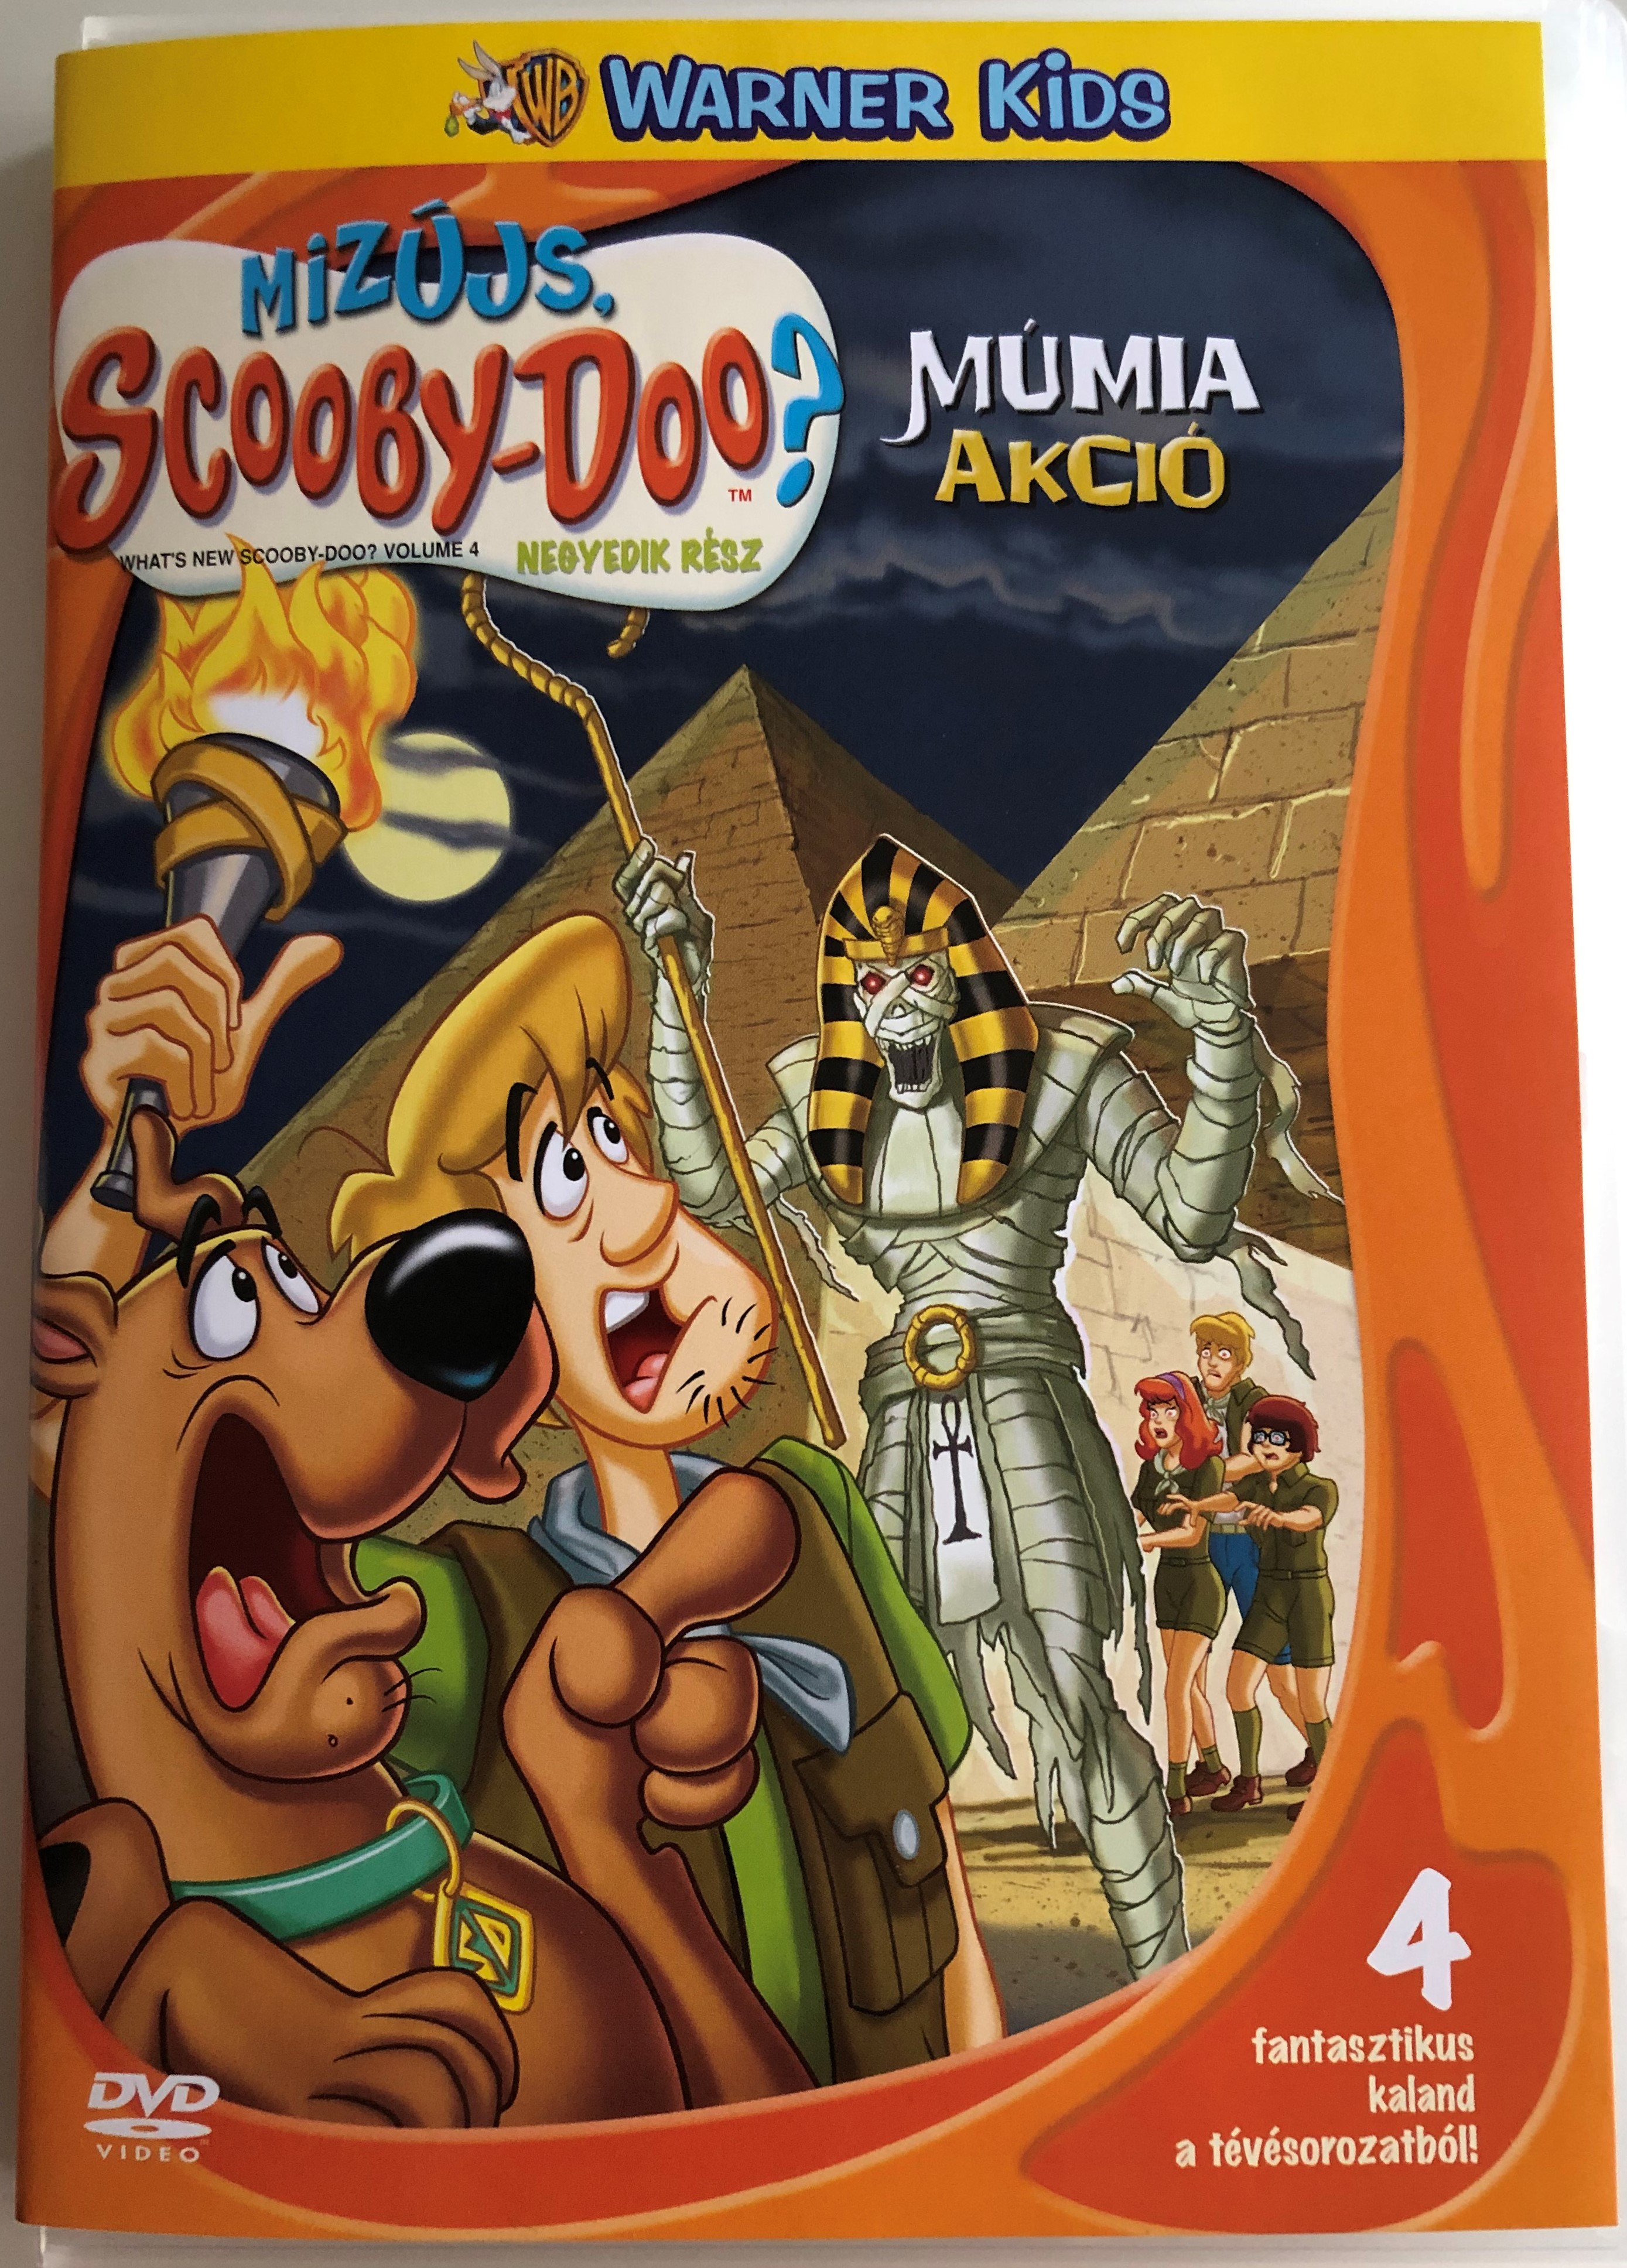 What's new Scooby-Doo? Volume 4 DVD 2003 1.JPG